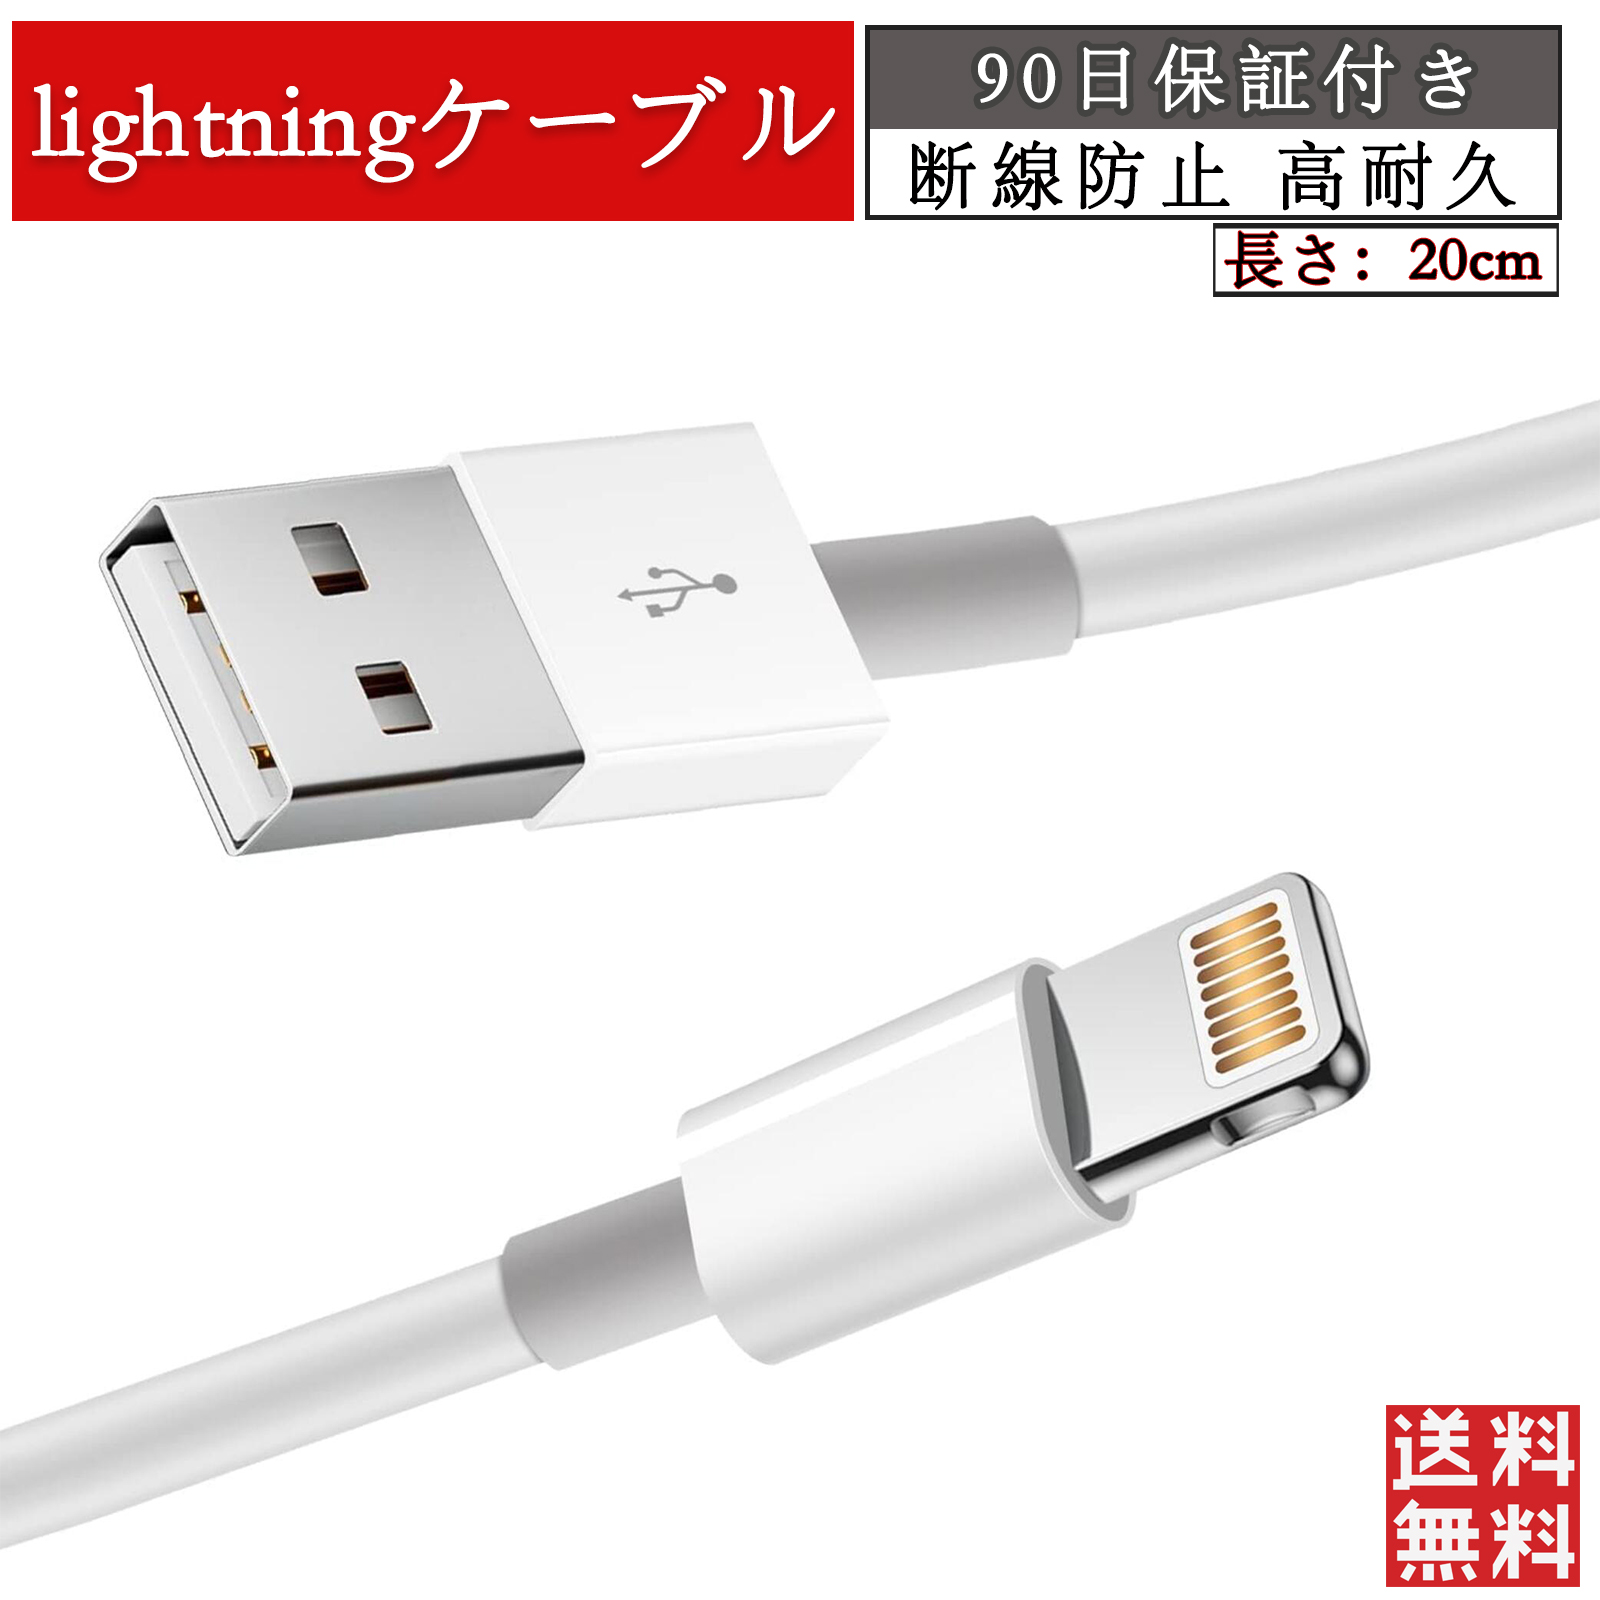 iPhone 充電器 ライトニング ケーブル USB 充電 コード 3m 金